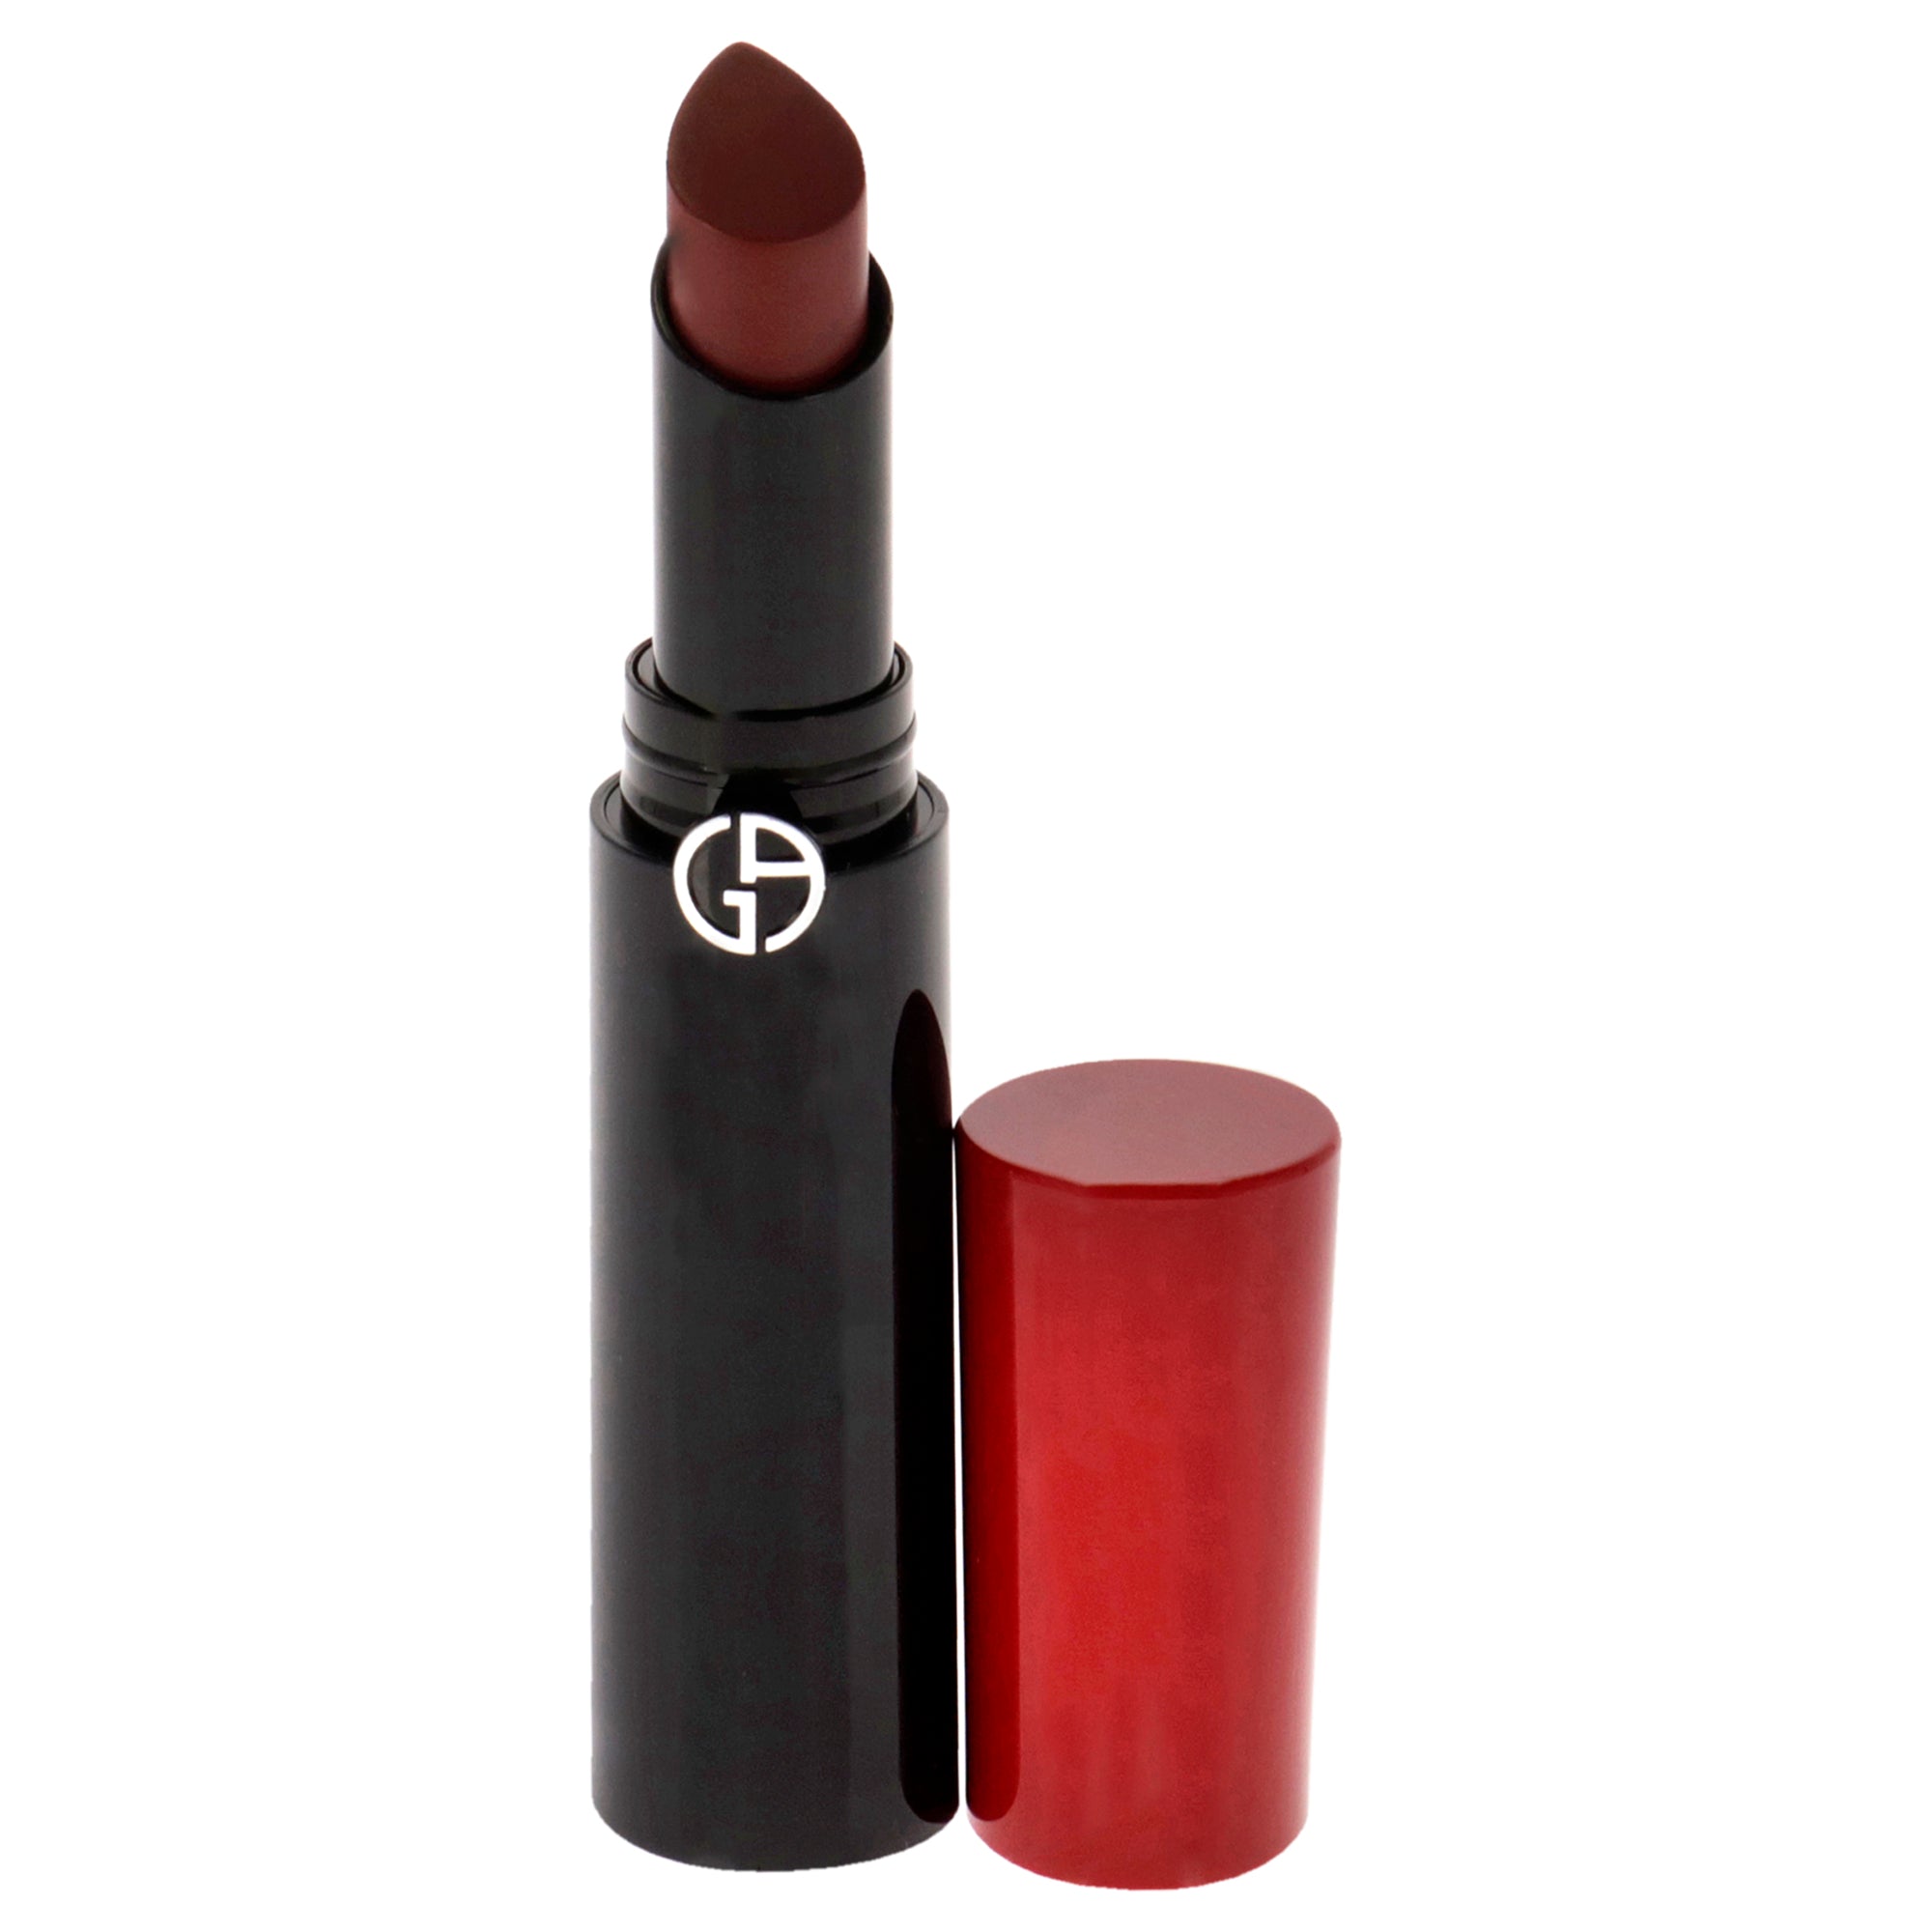 Lip Power Longwear Vivid Color Lipstick - 504 Flirt by Giorgio Armani for Women - 0.11 oz Lipstick